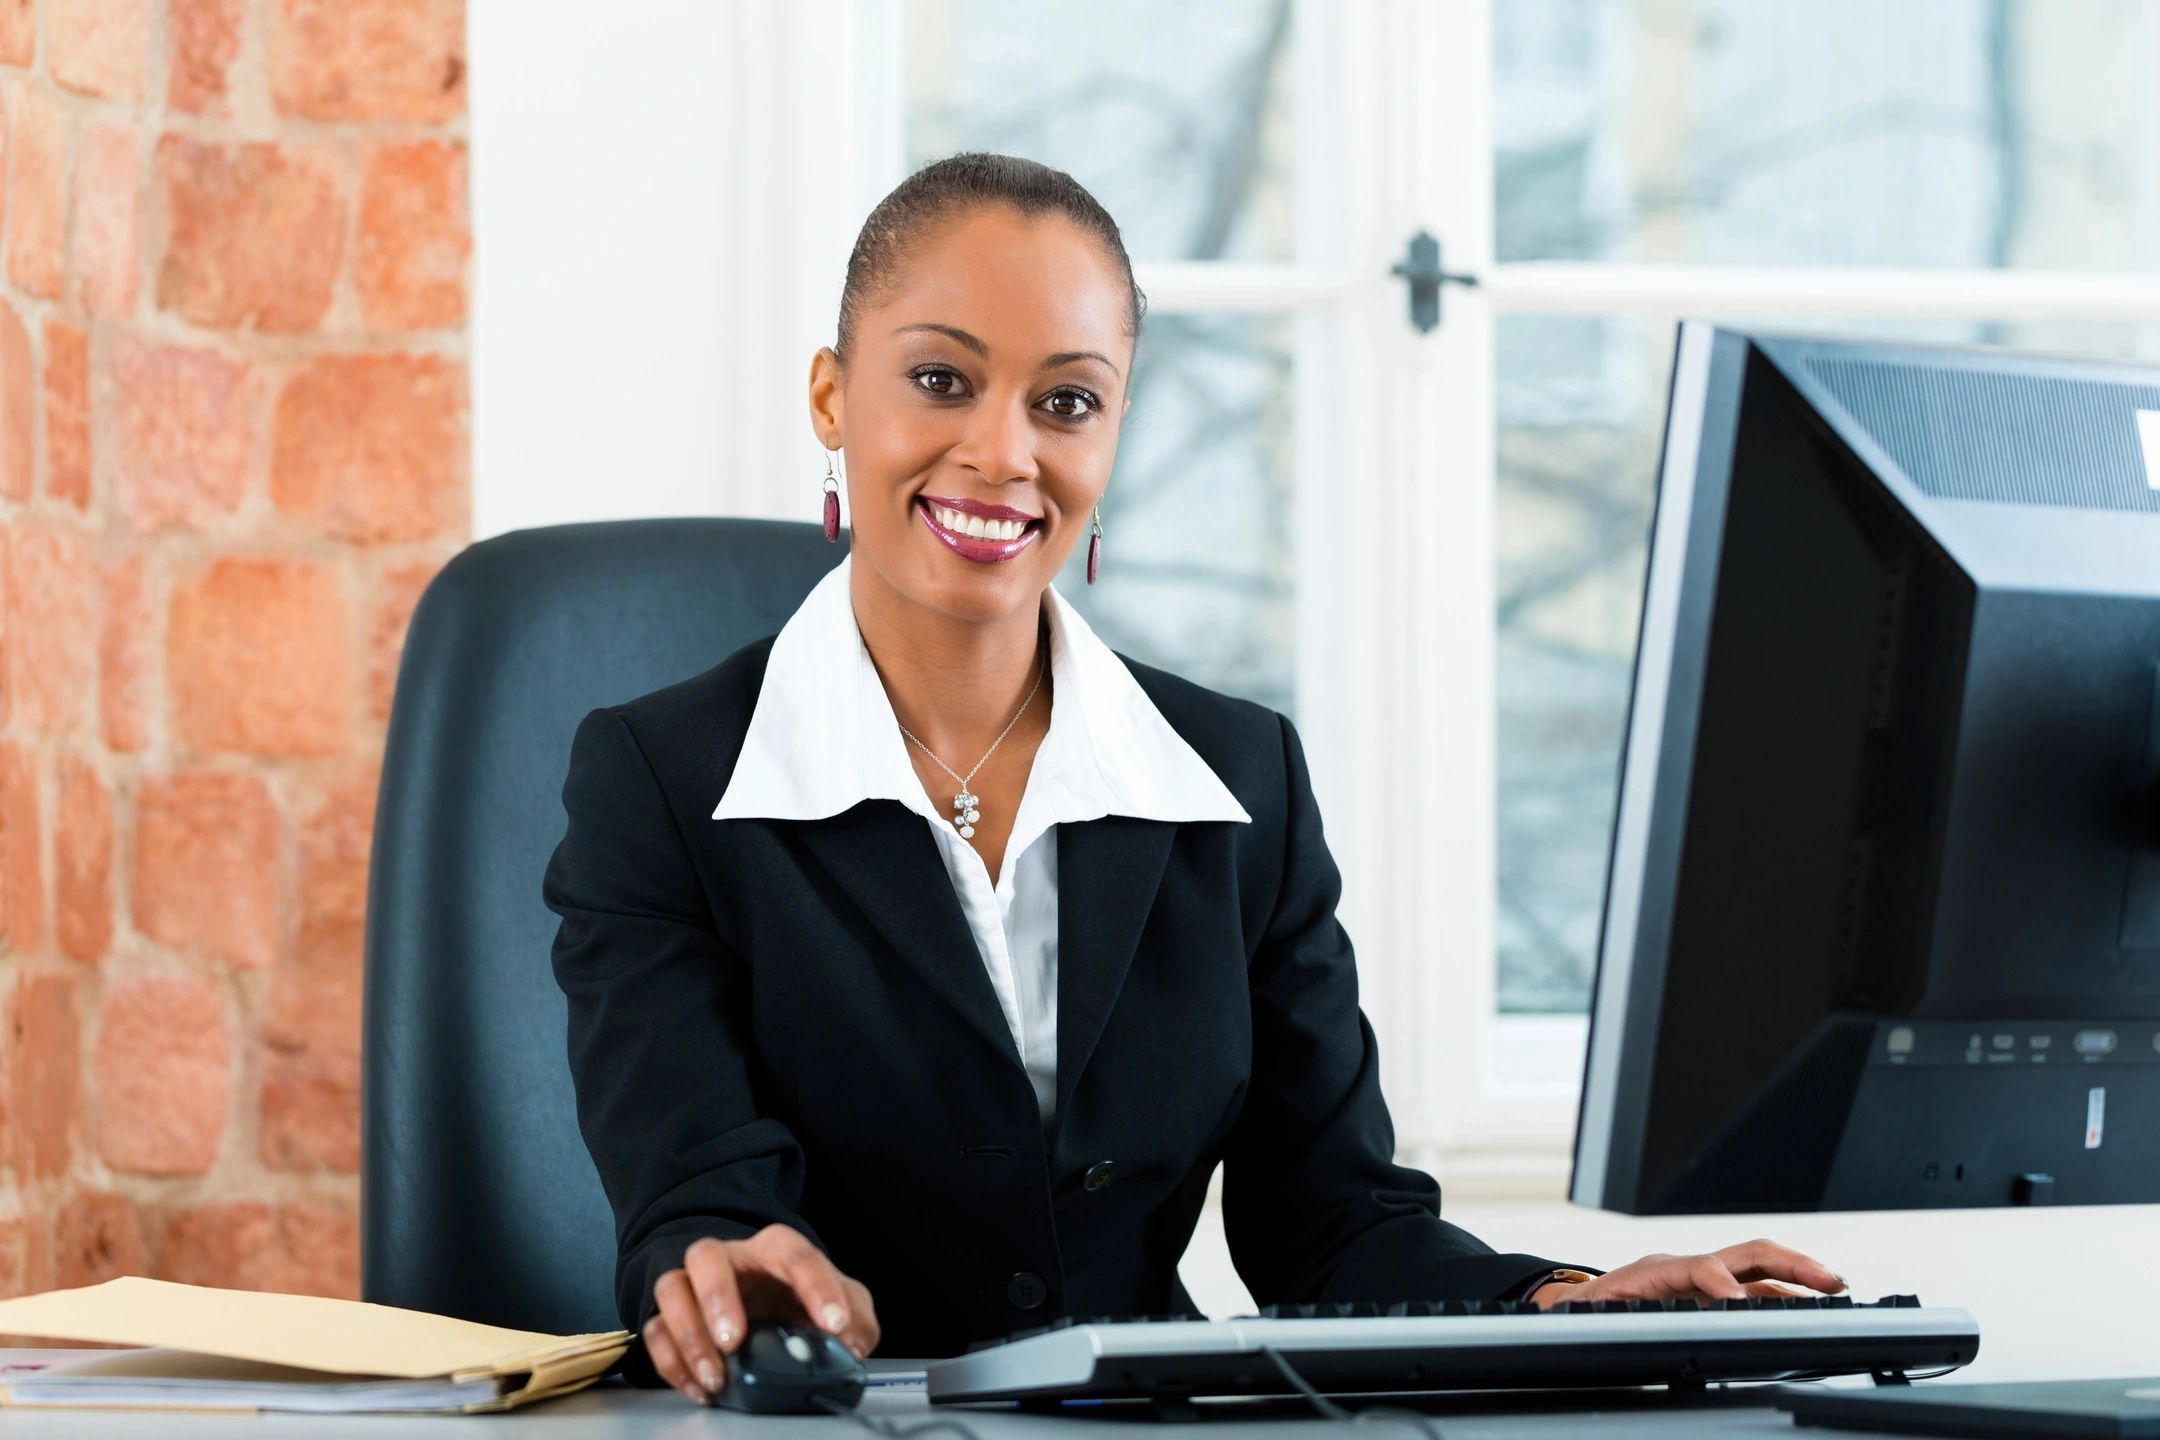 A smiling woman at a computer desk